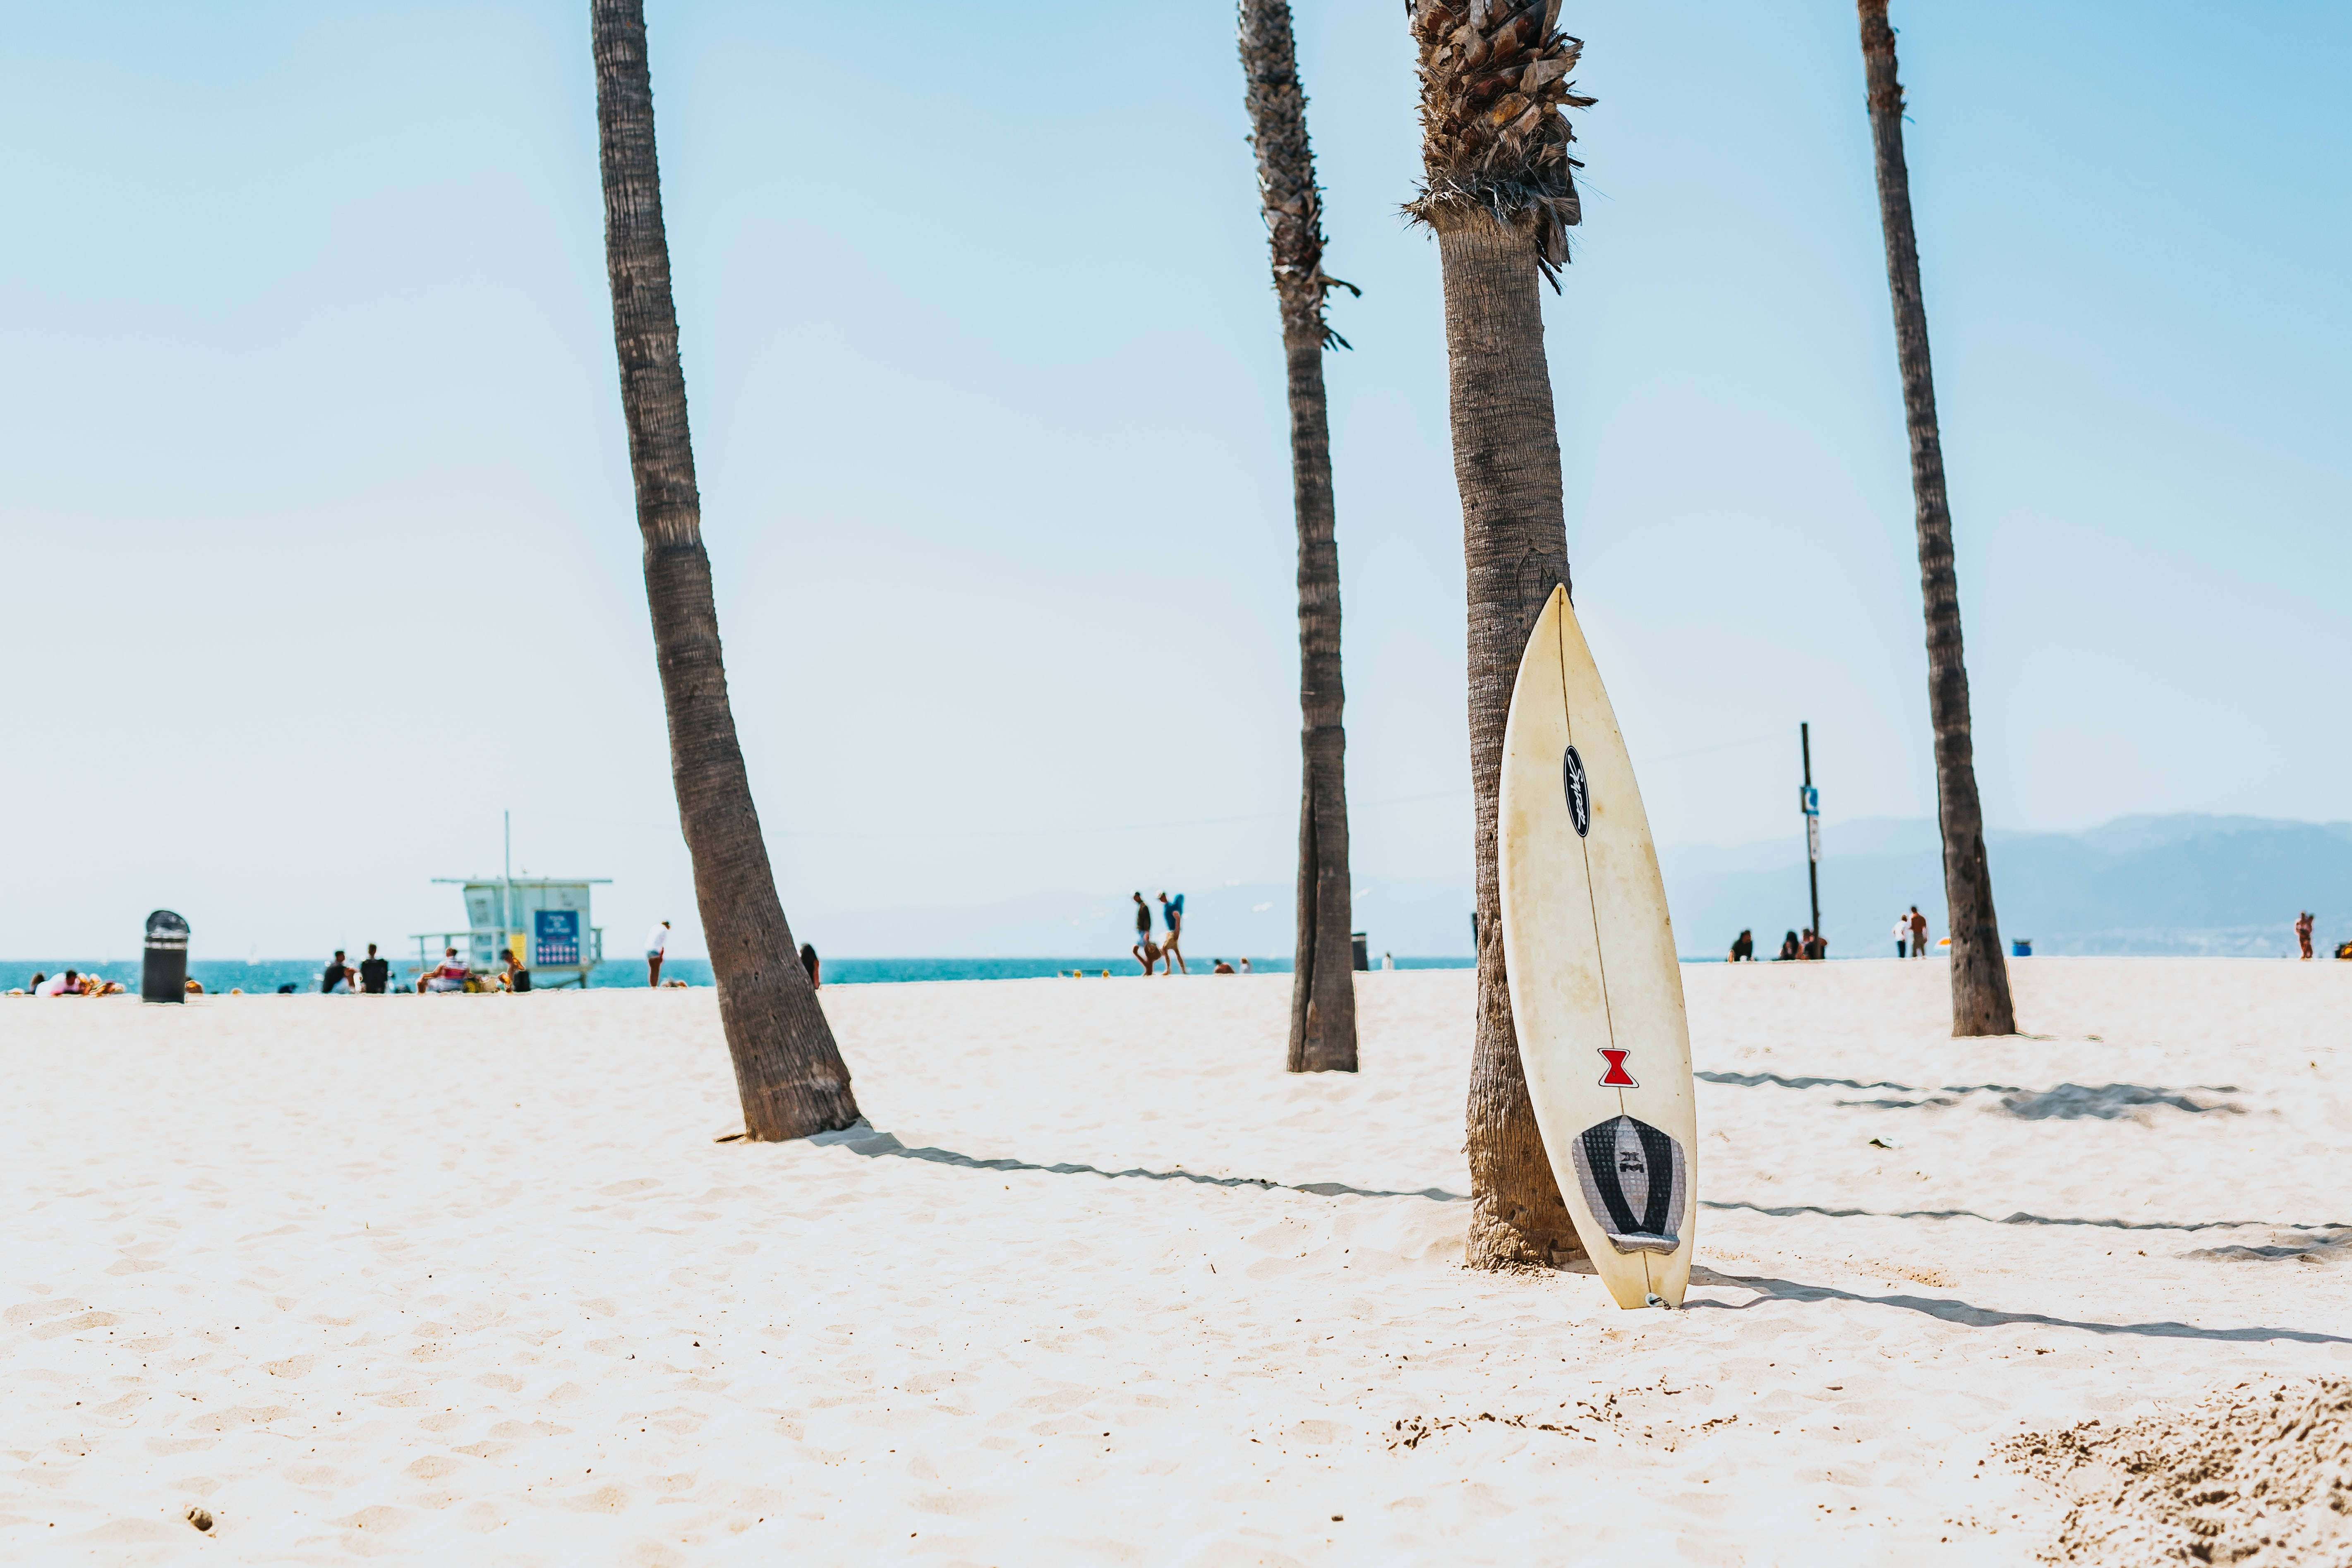 1920x1080 Hd Beach Desktop Surfboard And Palm Tree